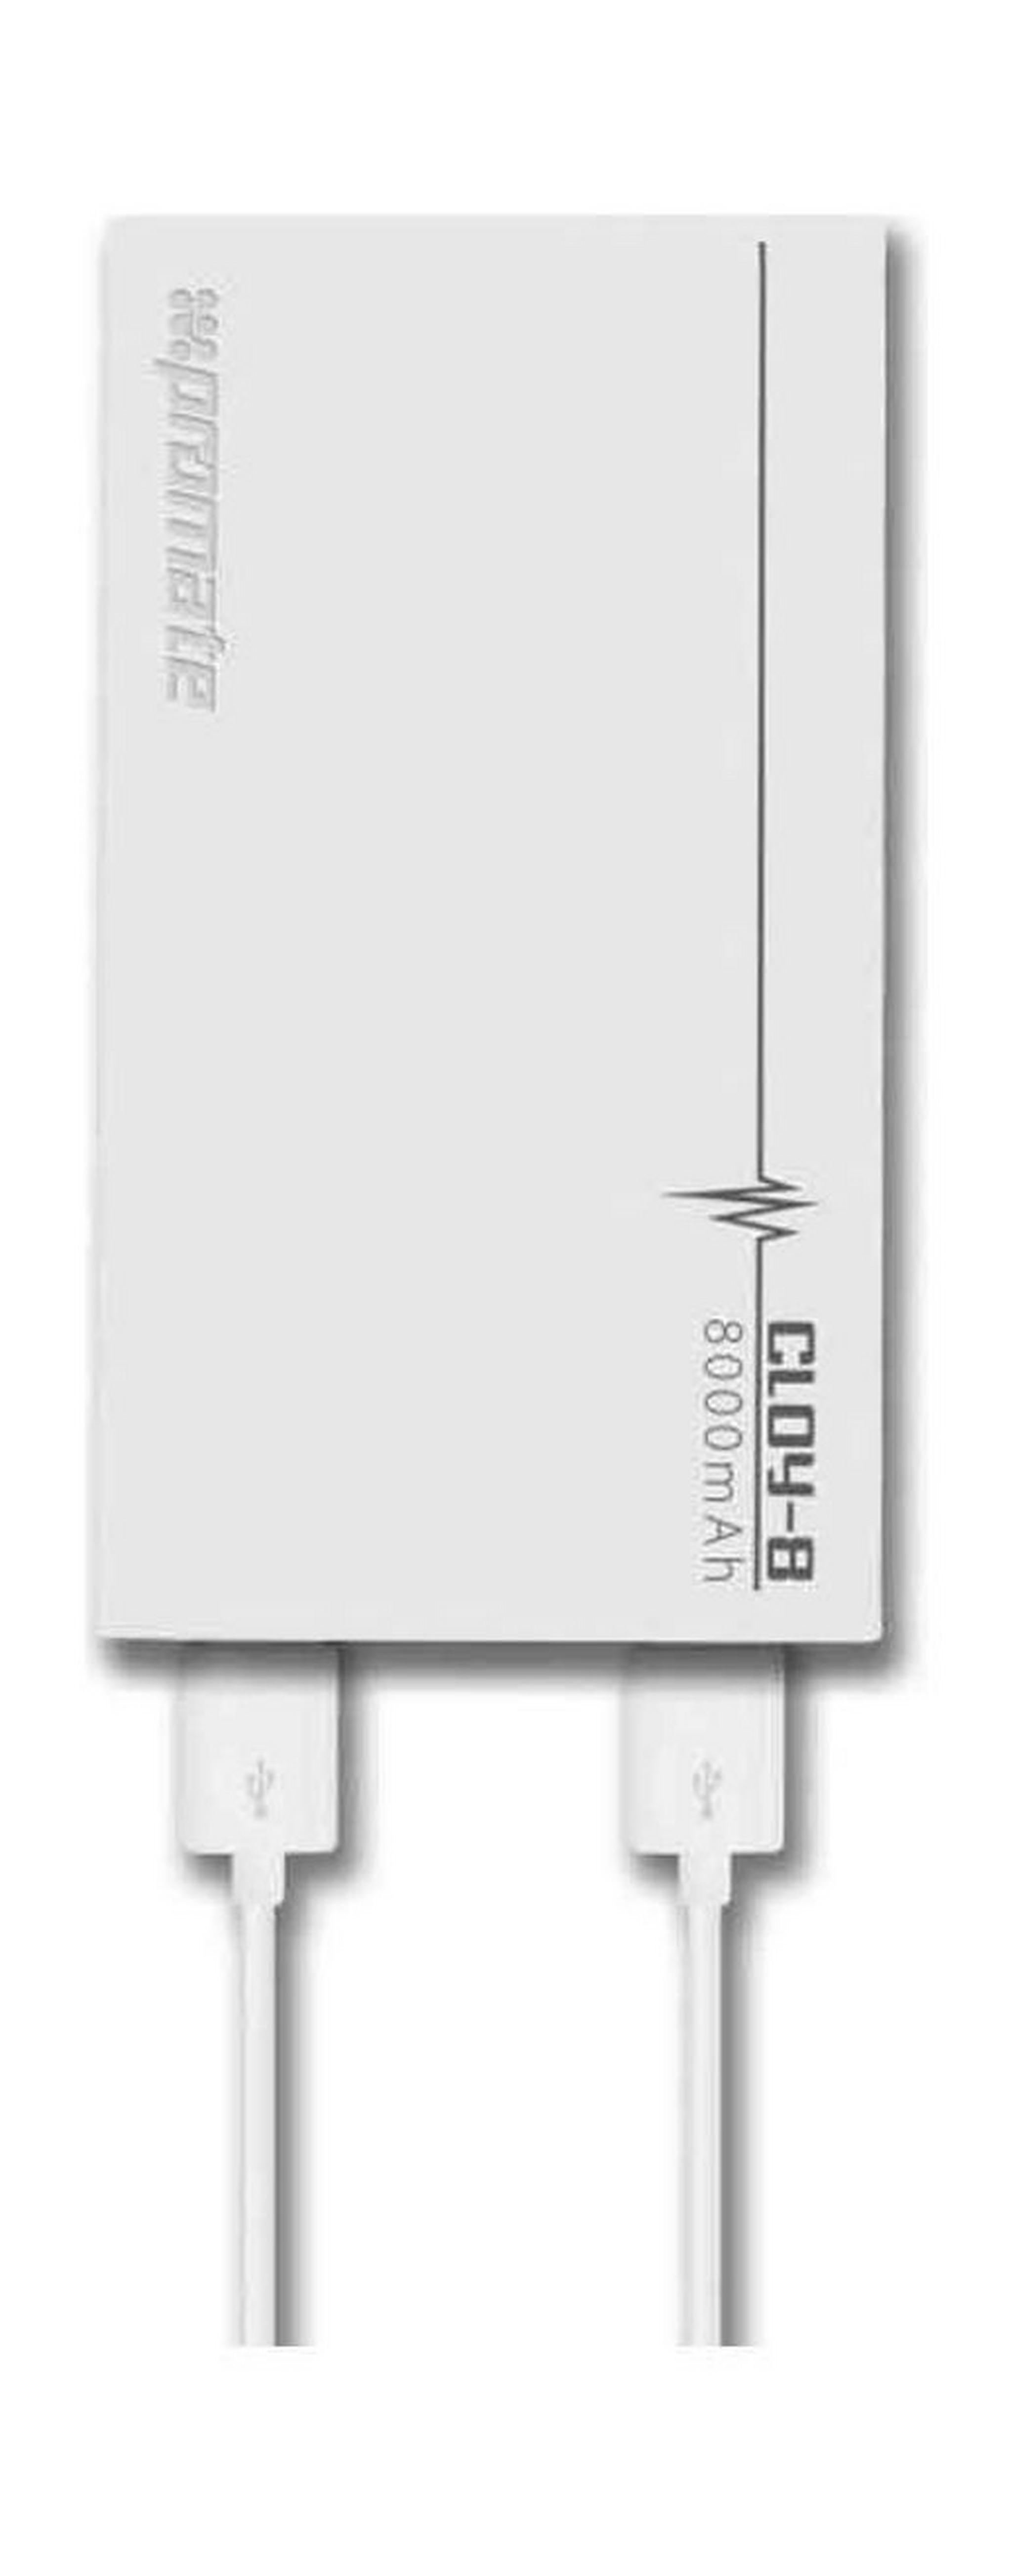 Promate Cloy-8 Premium Dual USB 8000mAh Power Bank - White